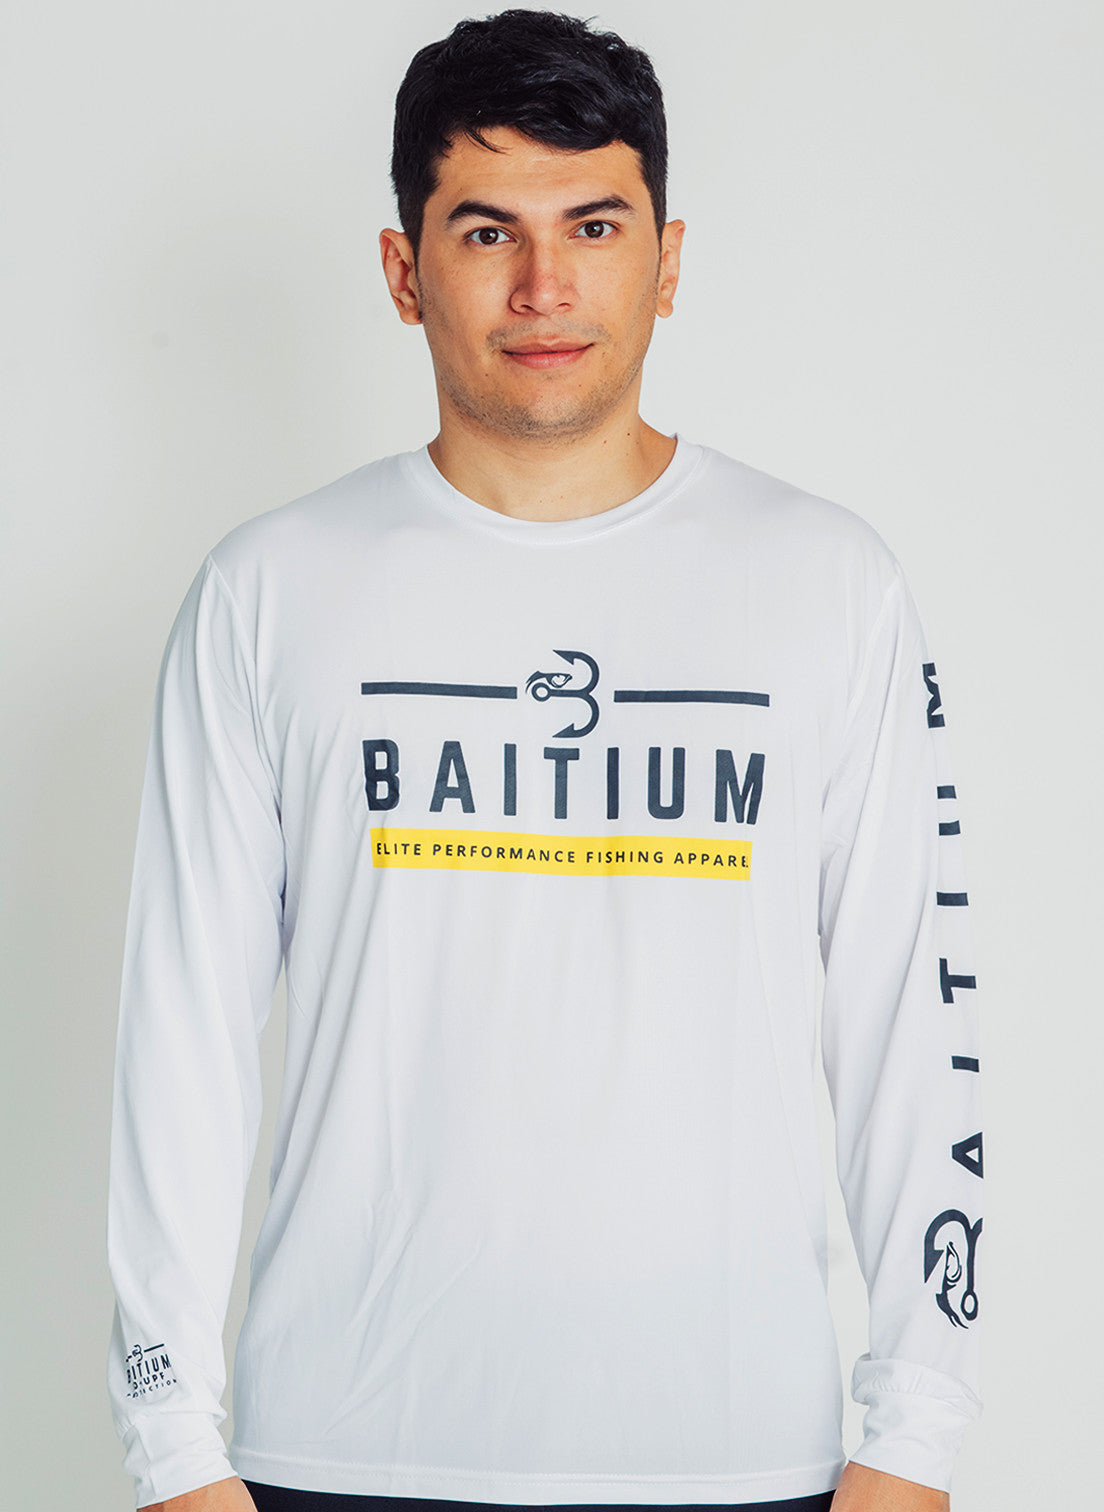 New Professional Fishing Shirts Long Sleeve UPF 50+ Breathable